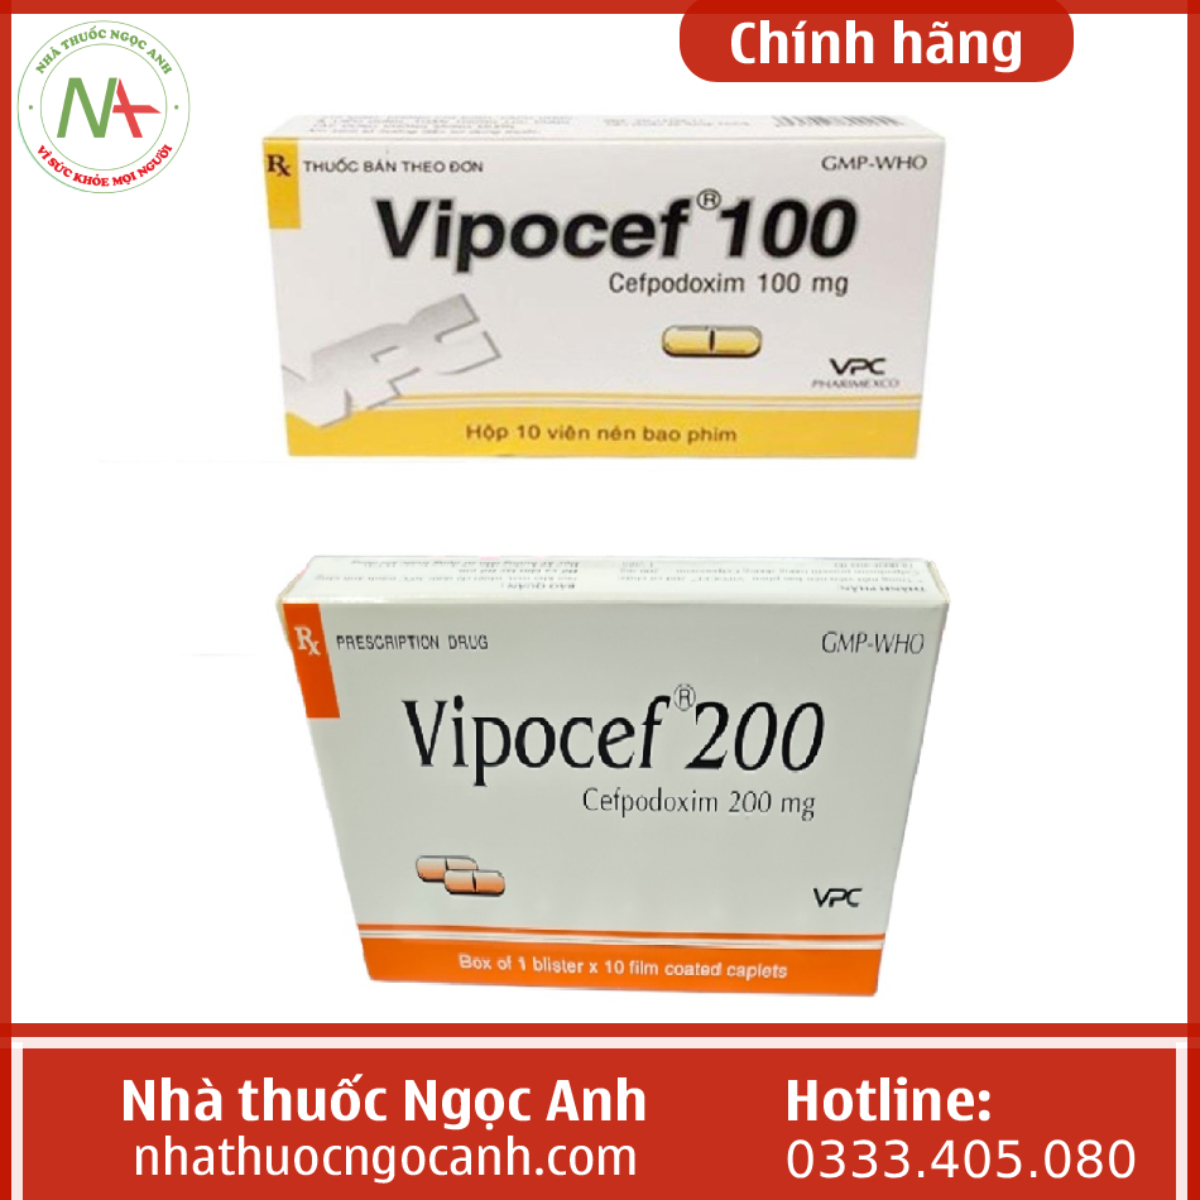 Vipocef 100 và Vipocef 200